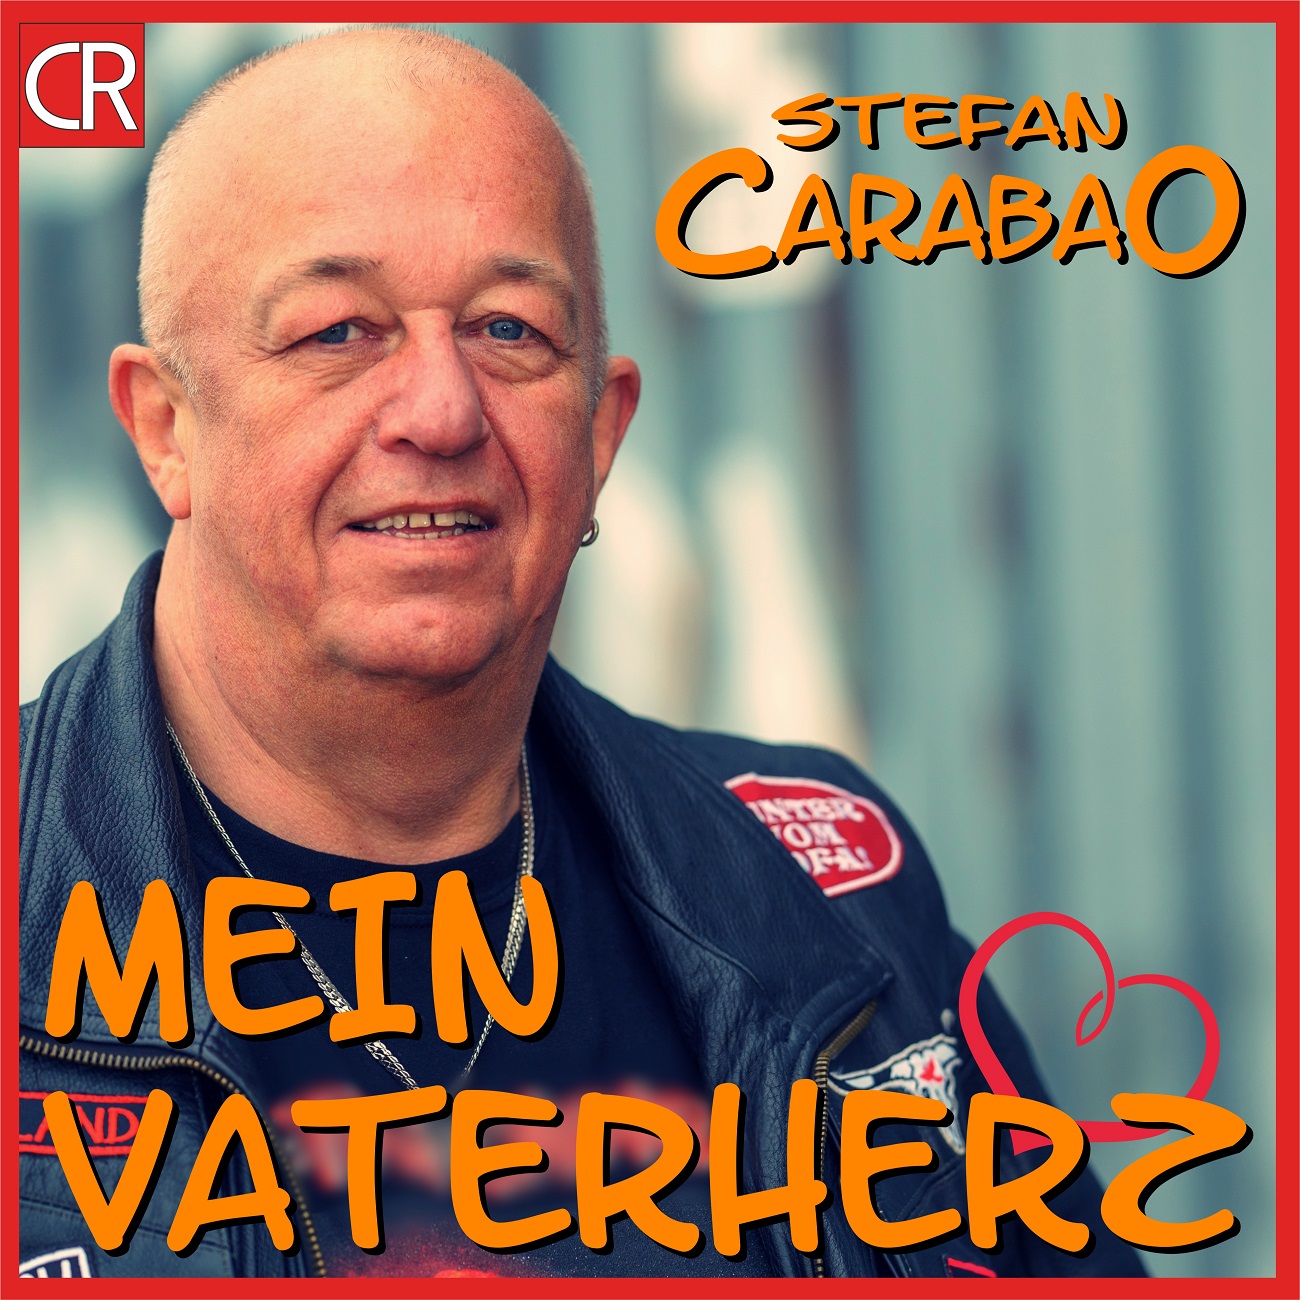 Stefan Carabao - Mein Vaterherz - Cover.jpg